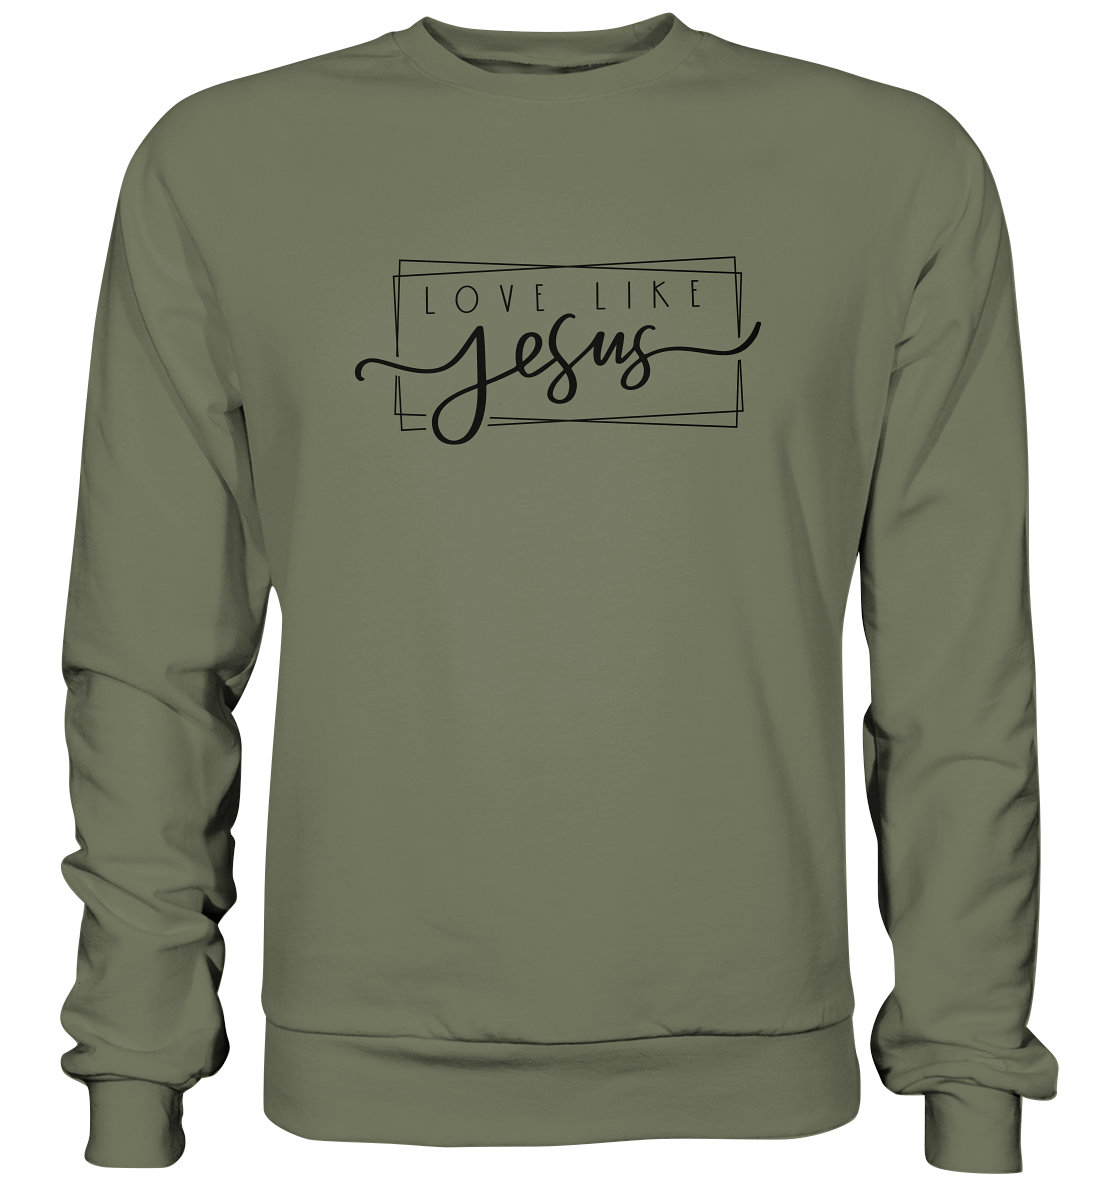 Love Like Jesus - Premium Sweatshirt